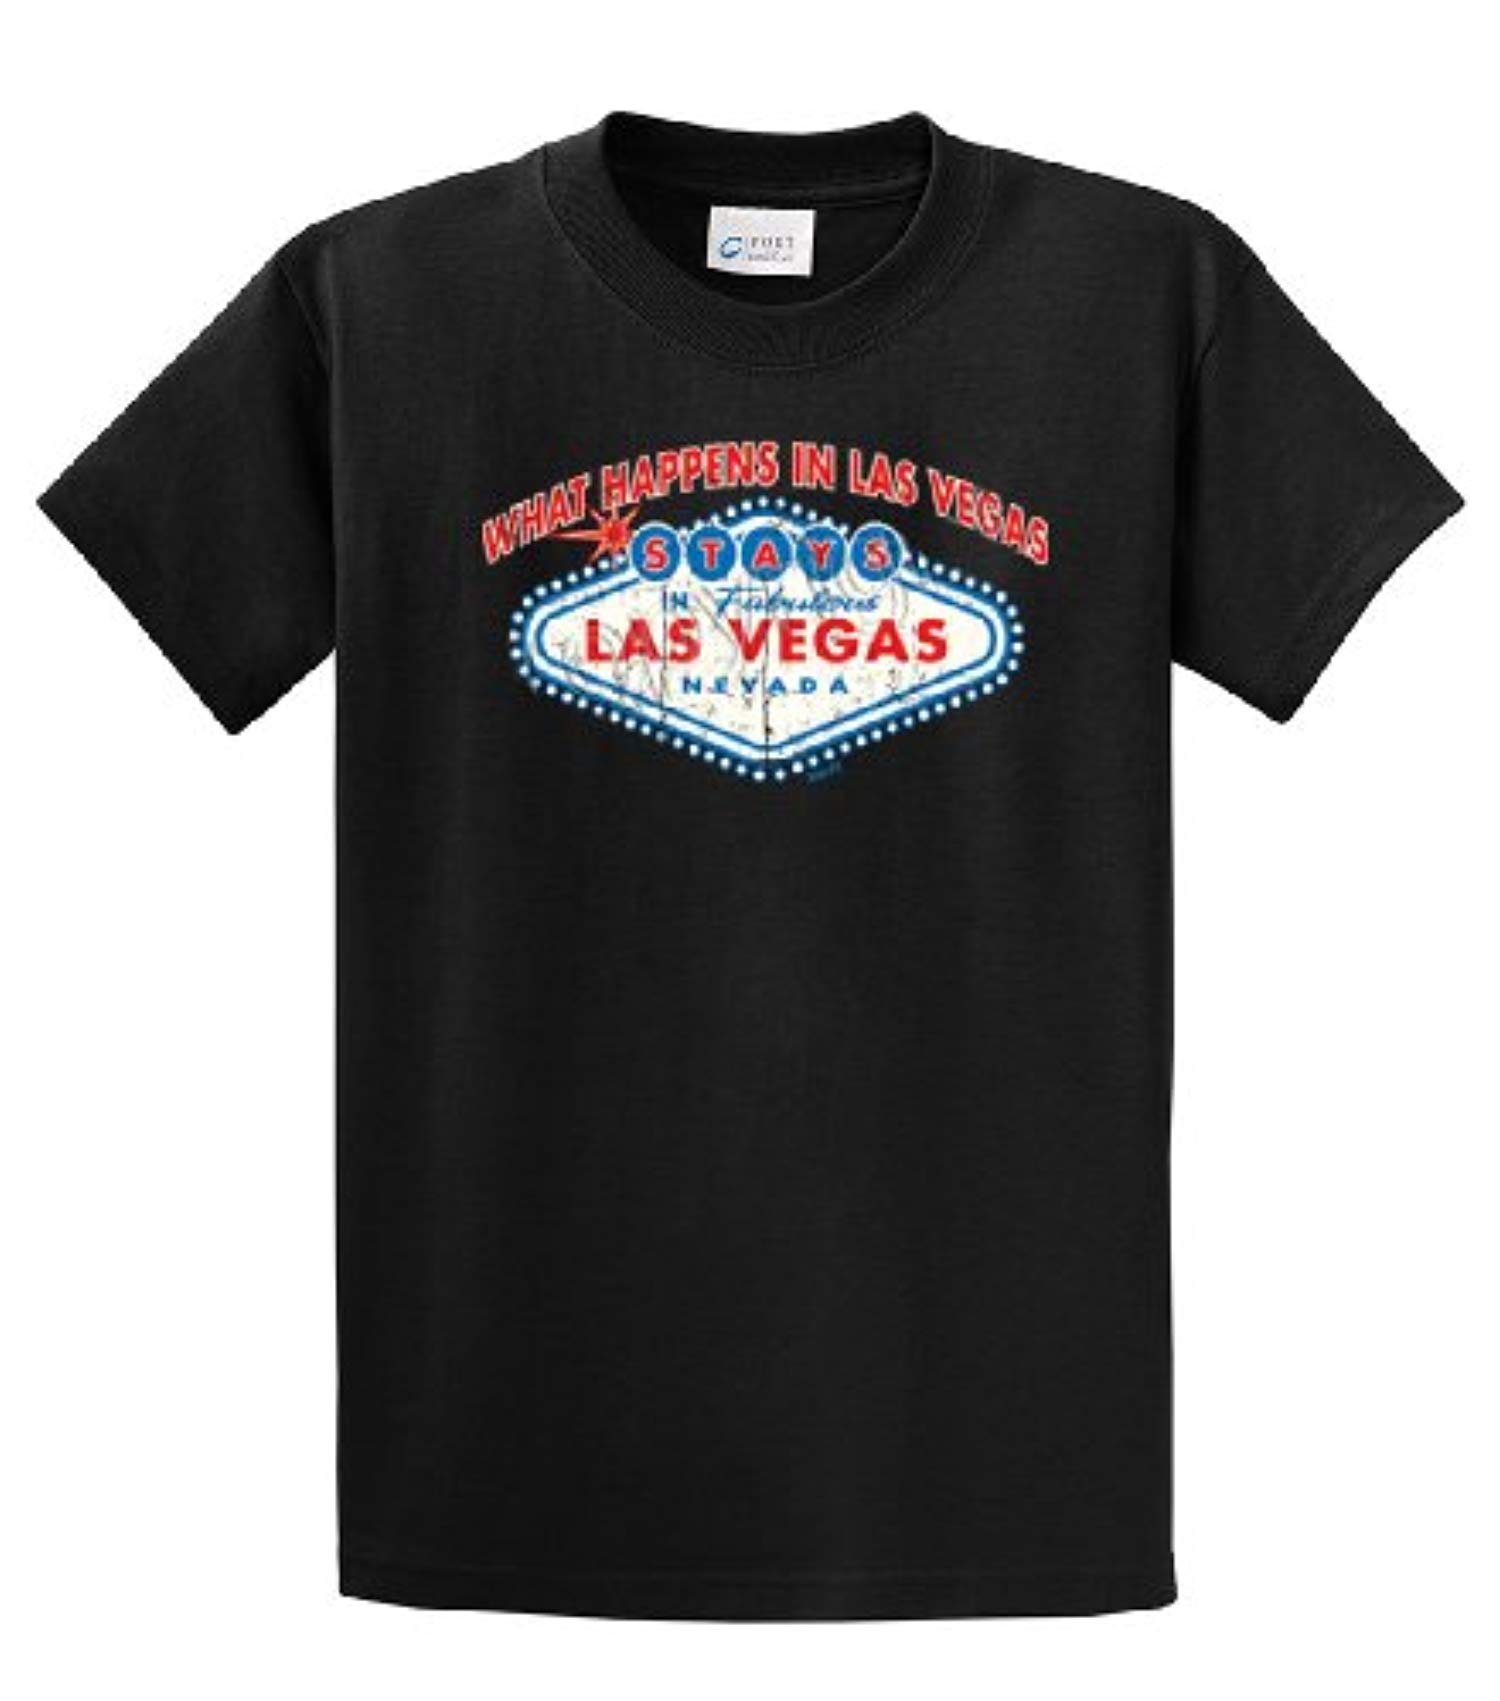 What Happens In Vegas Stays In Vegas Las Vegas T-shirt Funny Vacation Visit Slogan Tee-Black-Large - image 1 of 4